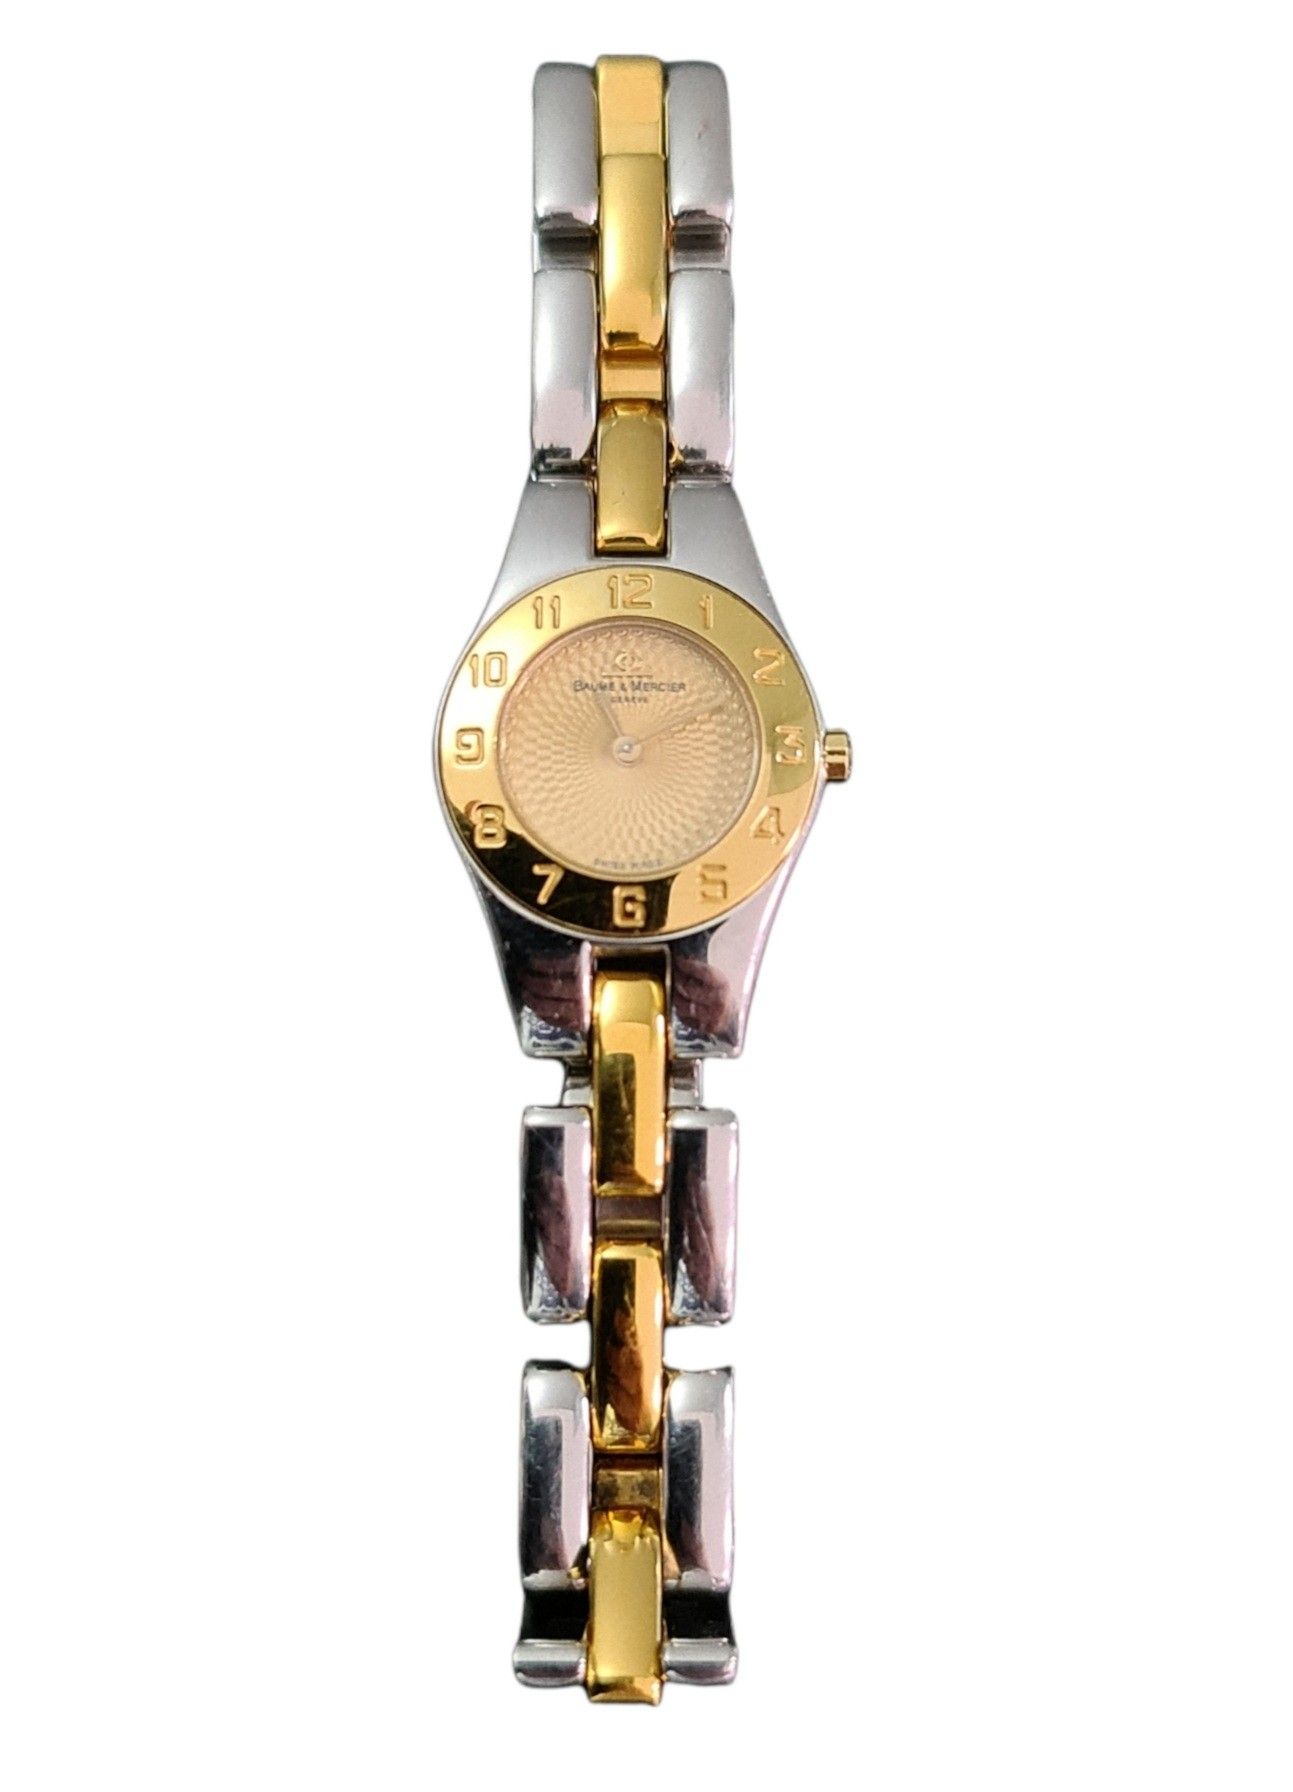 Null Baume & Mercier（名士）Linea型号的女士手表，石英机芯 

NL: 名士的女士腕表，模型Linea，石英腕表